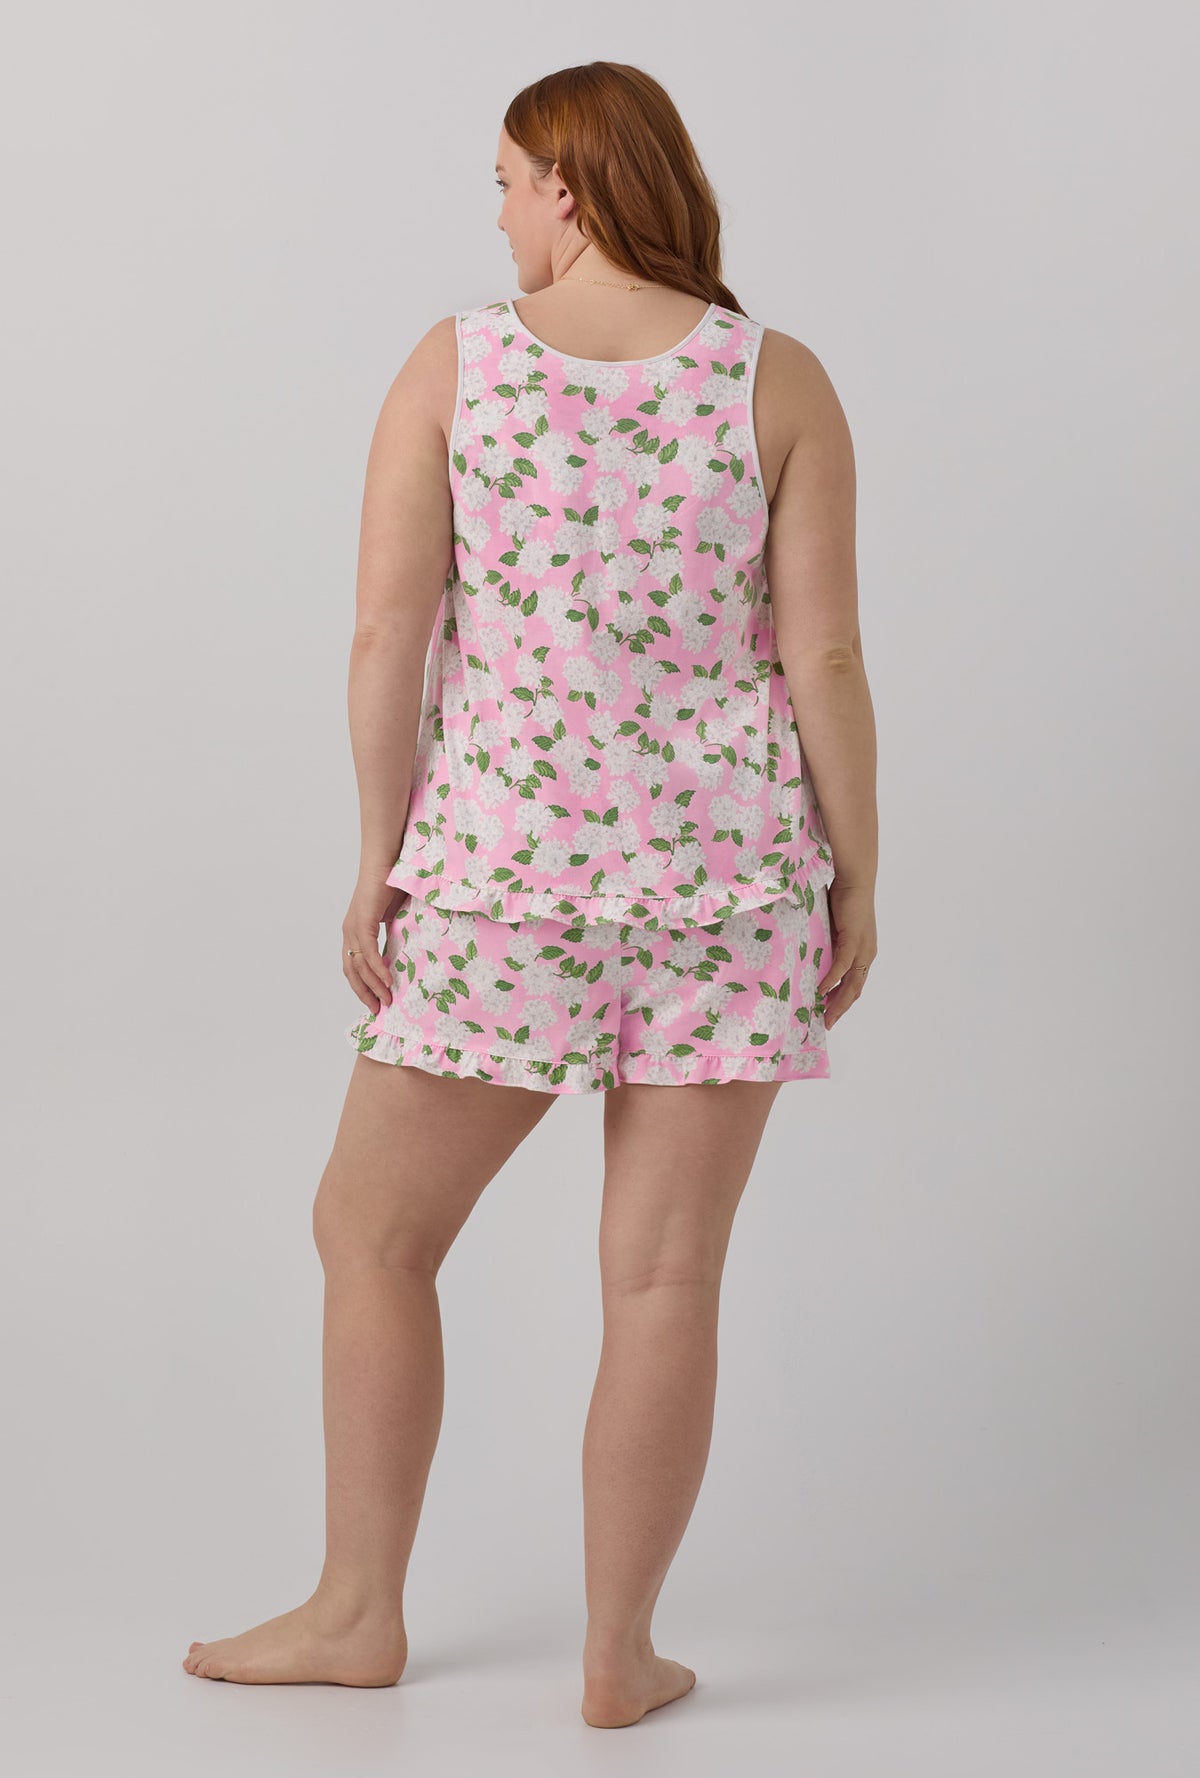 A lady wearing plus size pink Ruffle Tank Shorty Stretch Jersey plus size PJ Set with Pink Summer Hydrangea print.